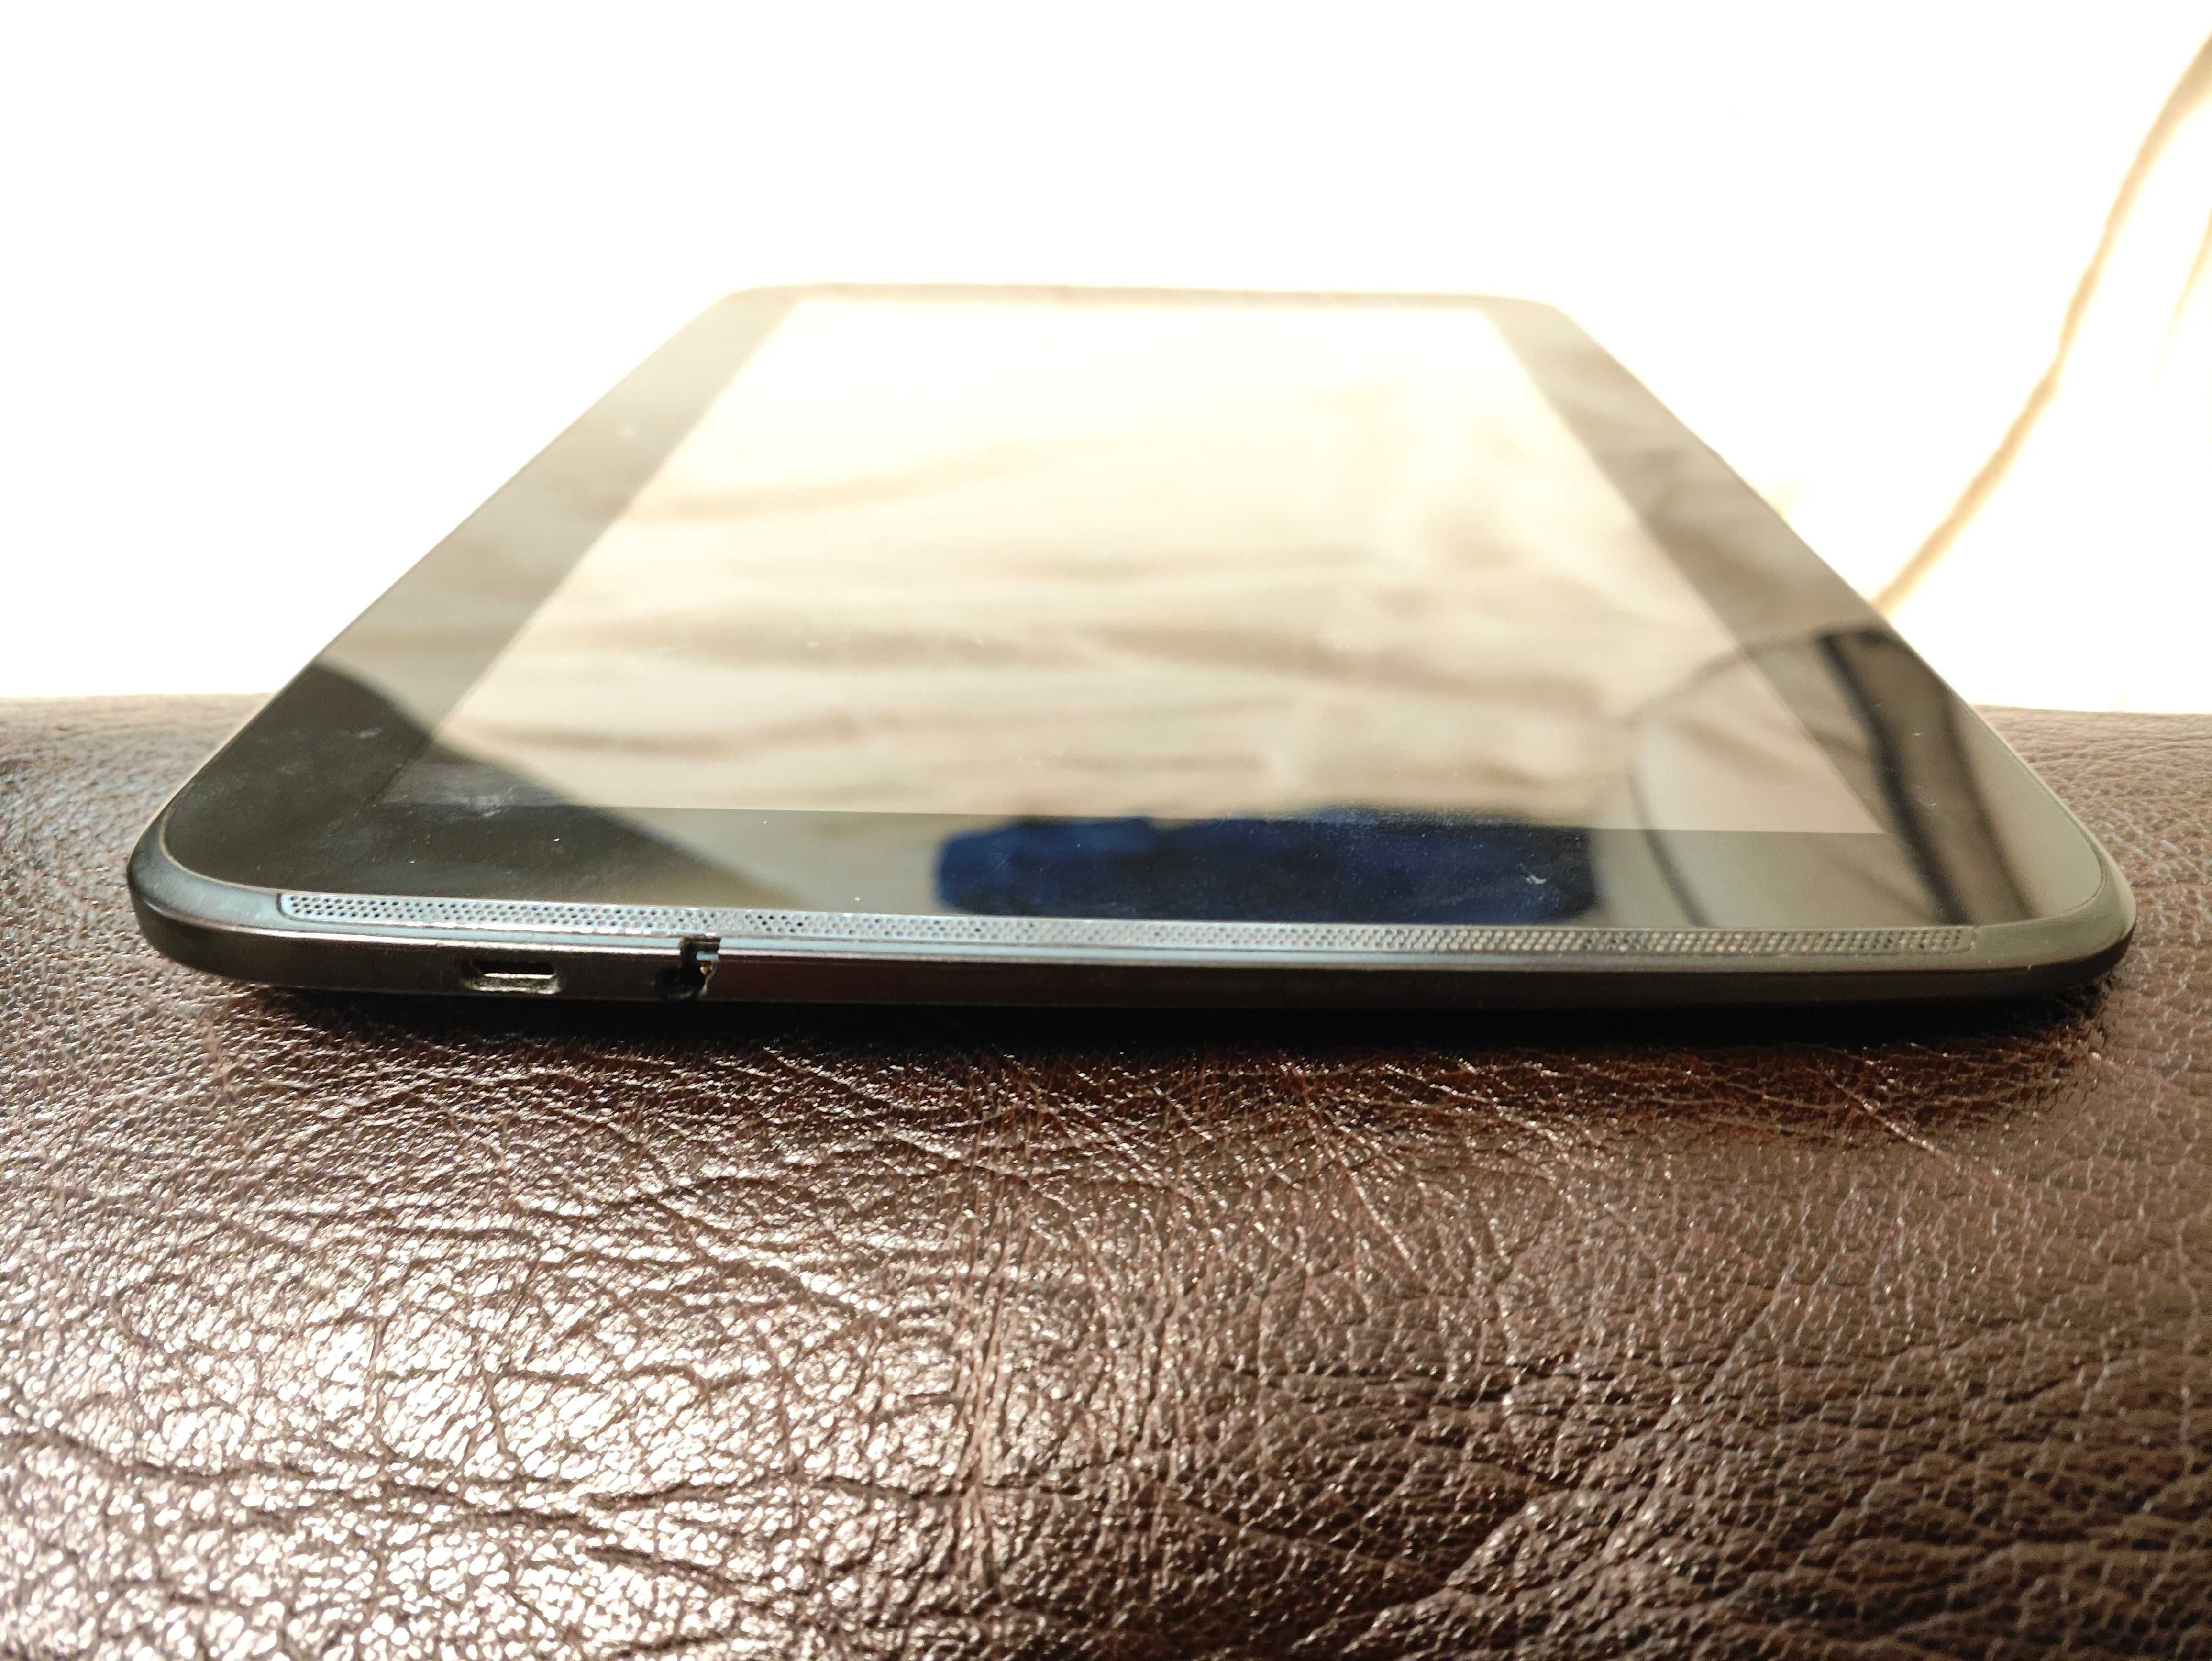 Таблет Samsung Google Nexus 10 - 10.1", 2 GB RAM, 32GB